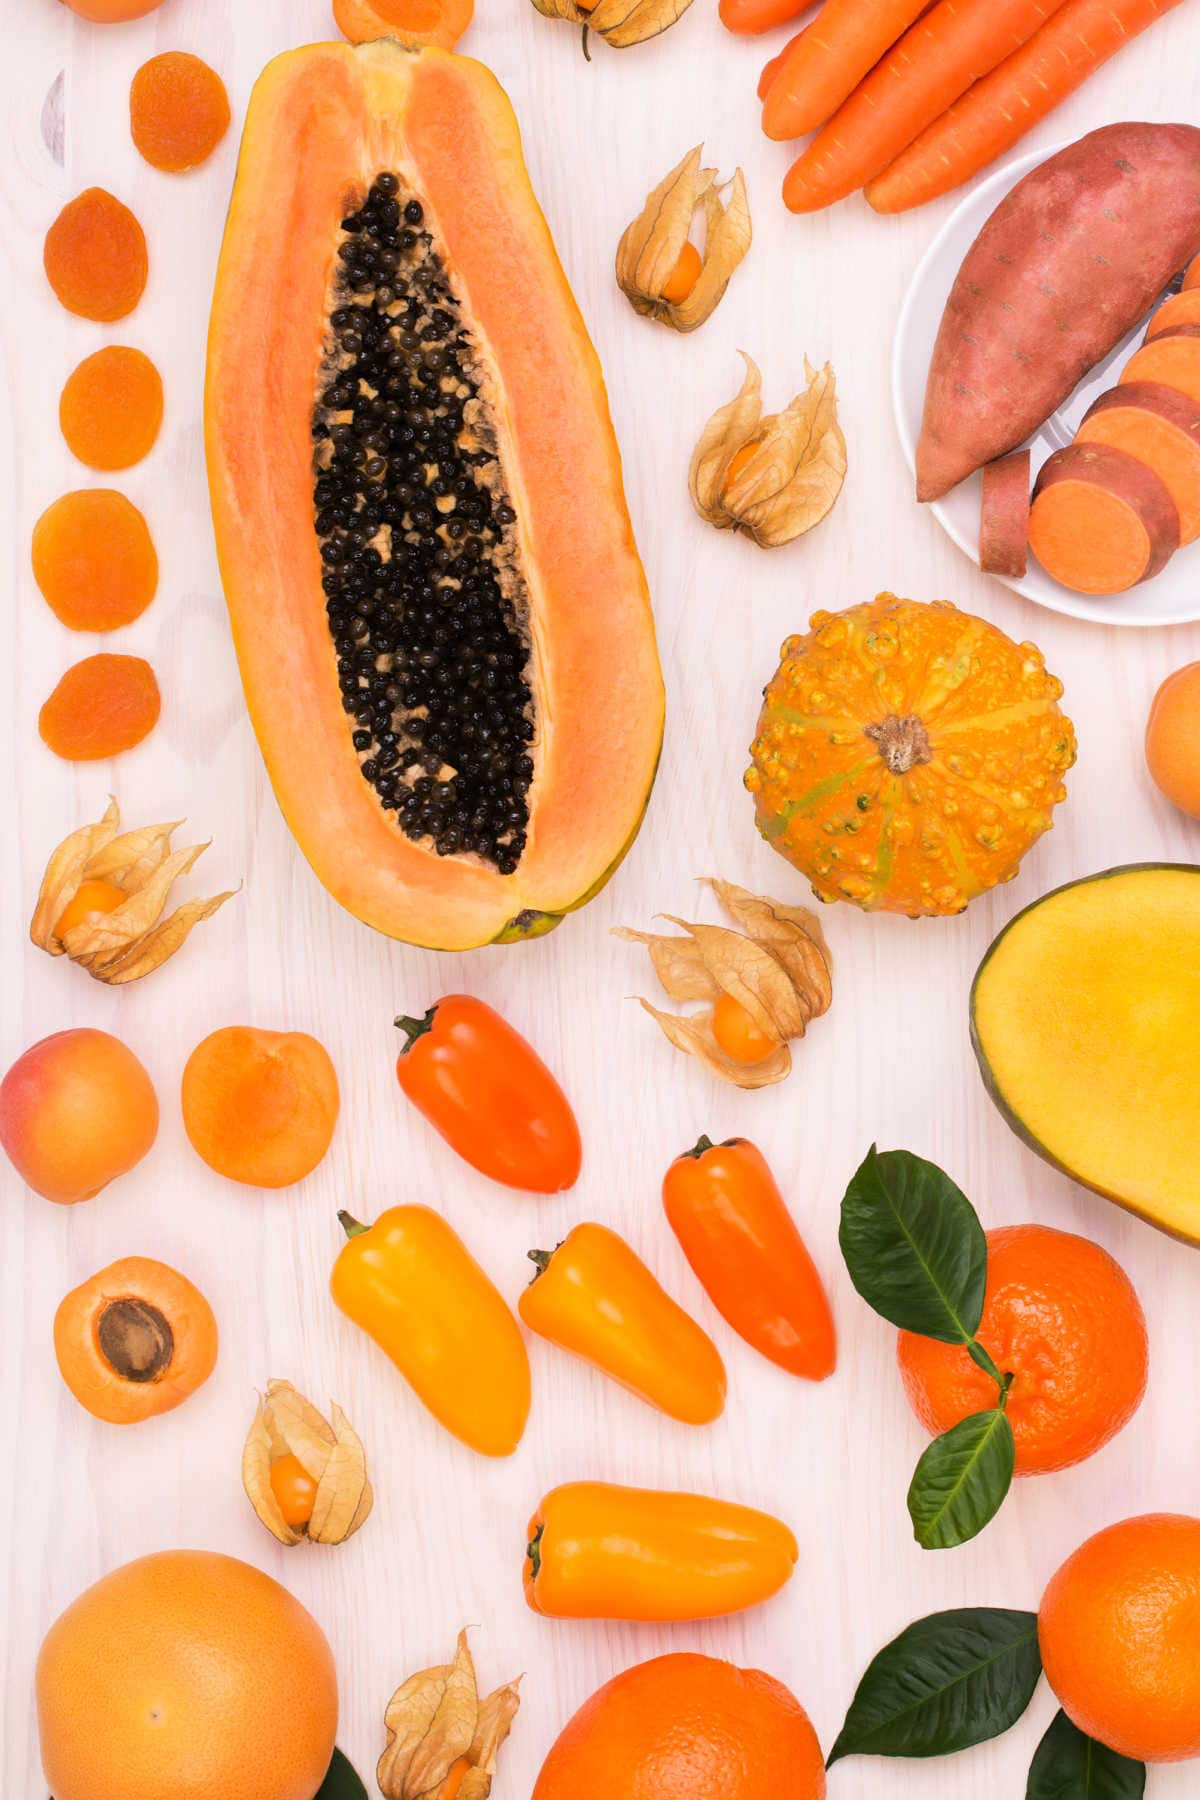 Orange Fruits and Orange Color Produce on a White Background